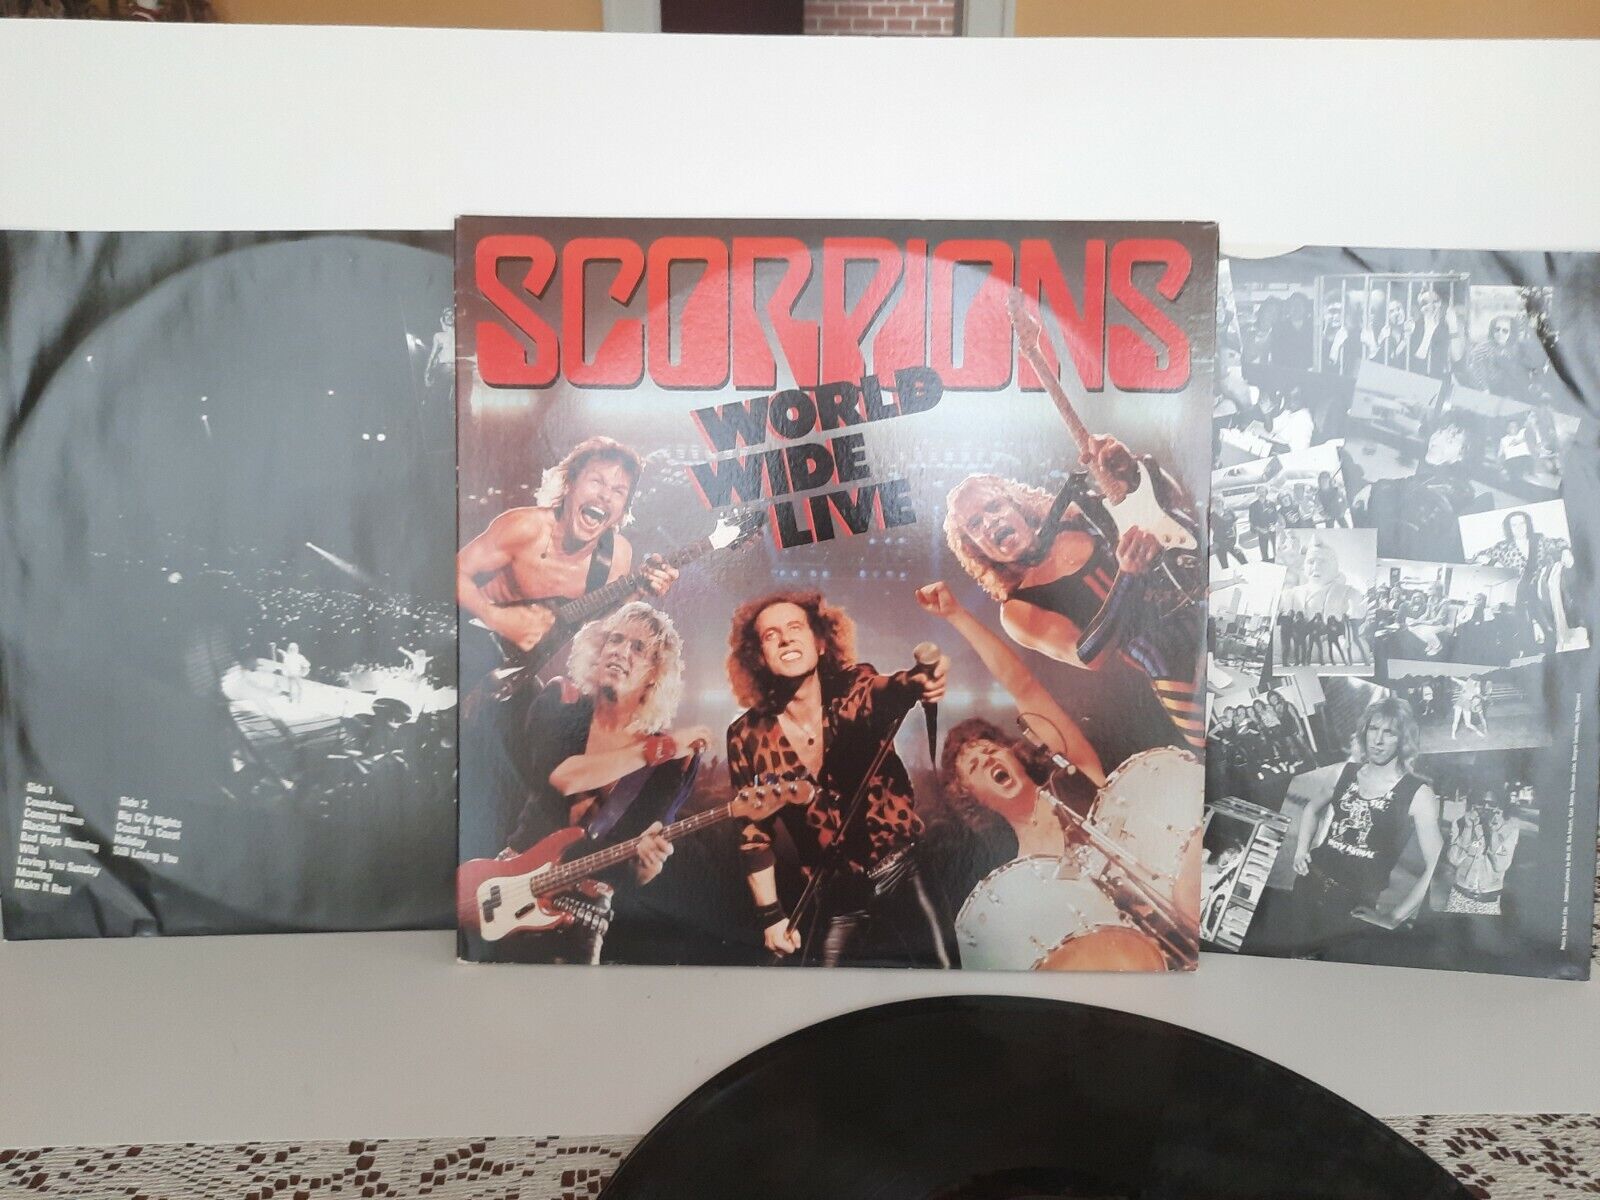 Scorpions 2 LPs "World Wide Live" 1985 Mercury 422-824 344-1 M-2 Metal VG